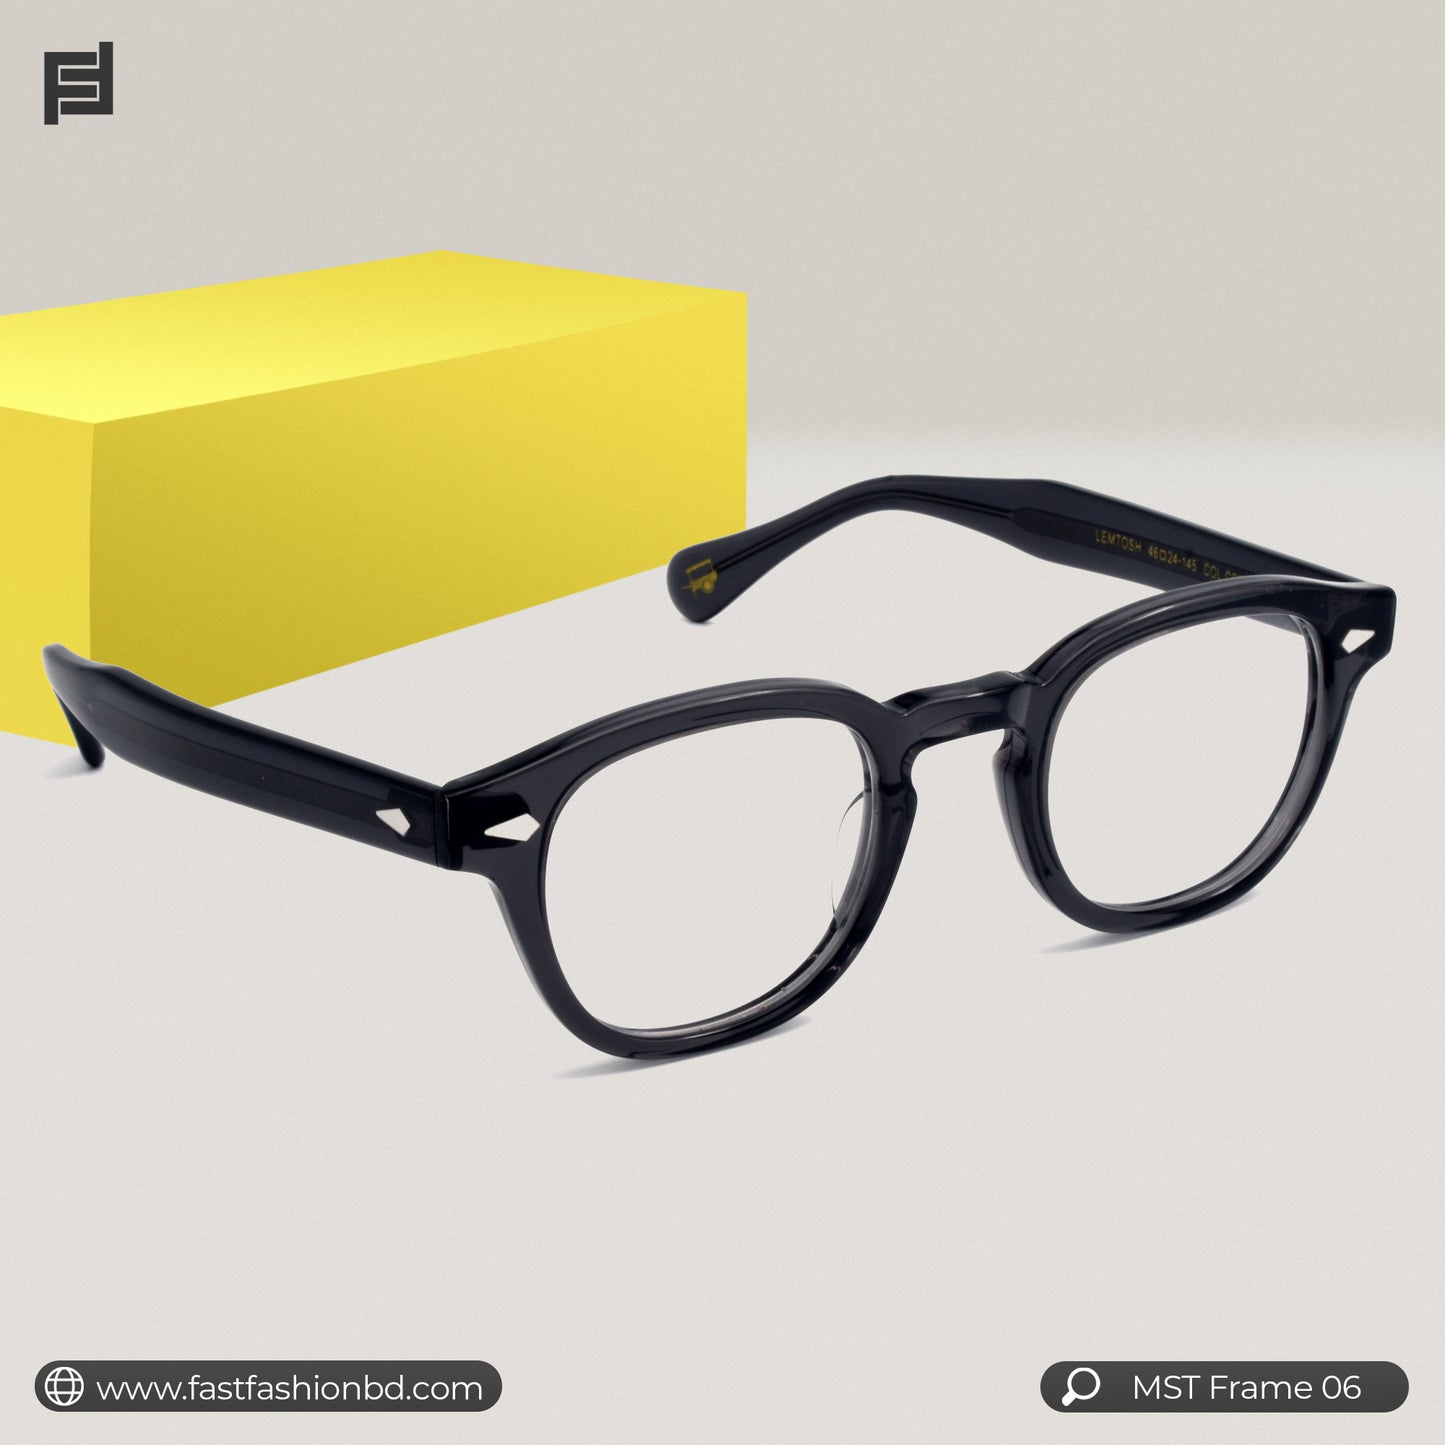 Luxury Modern Looking Trendy Stylish Optic Frame | MST Frame 06